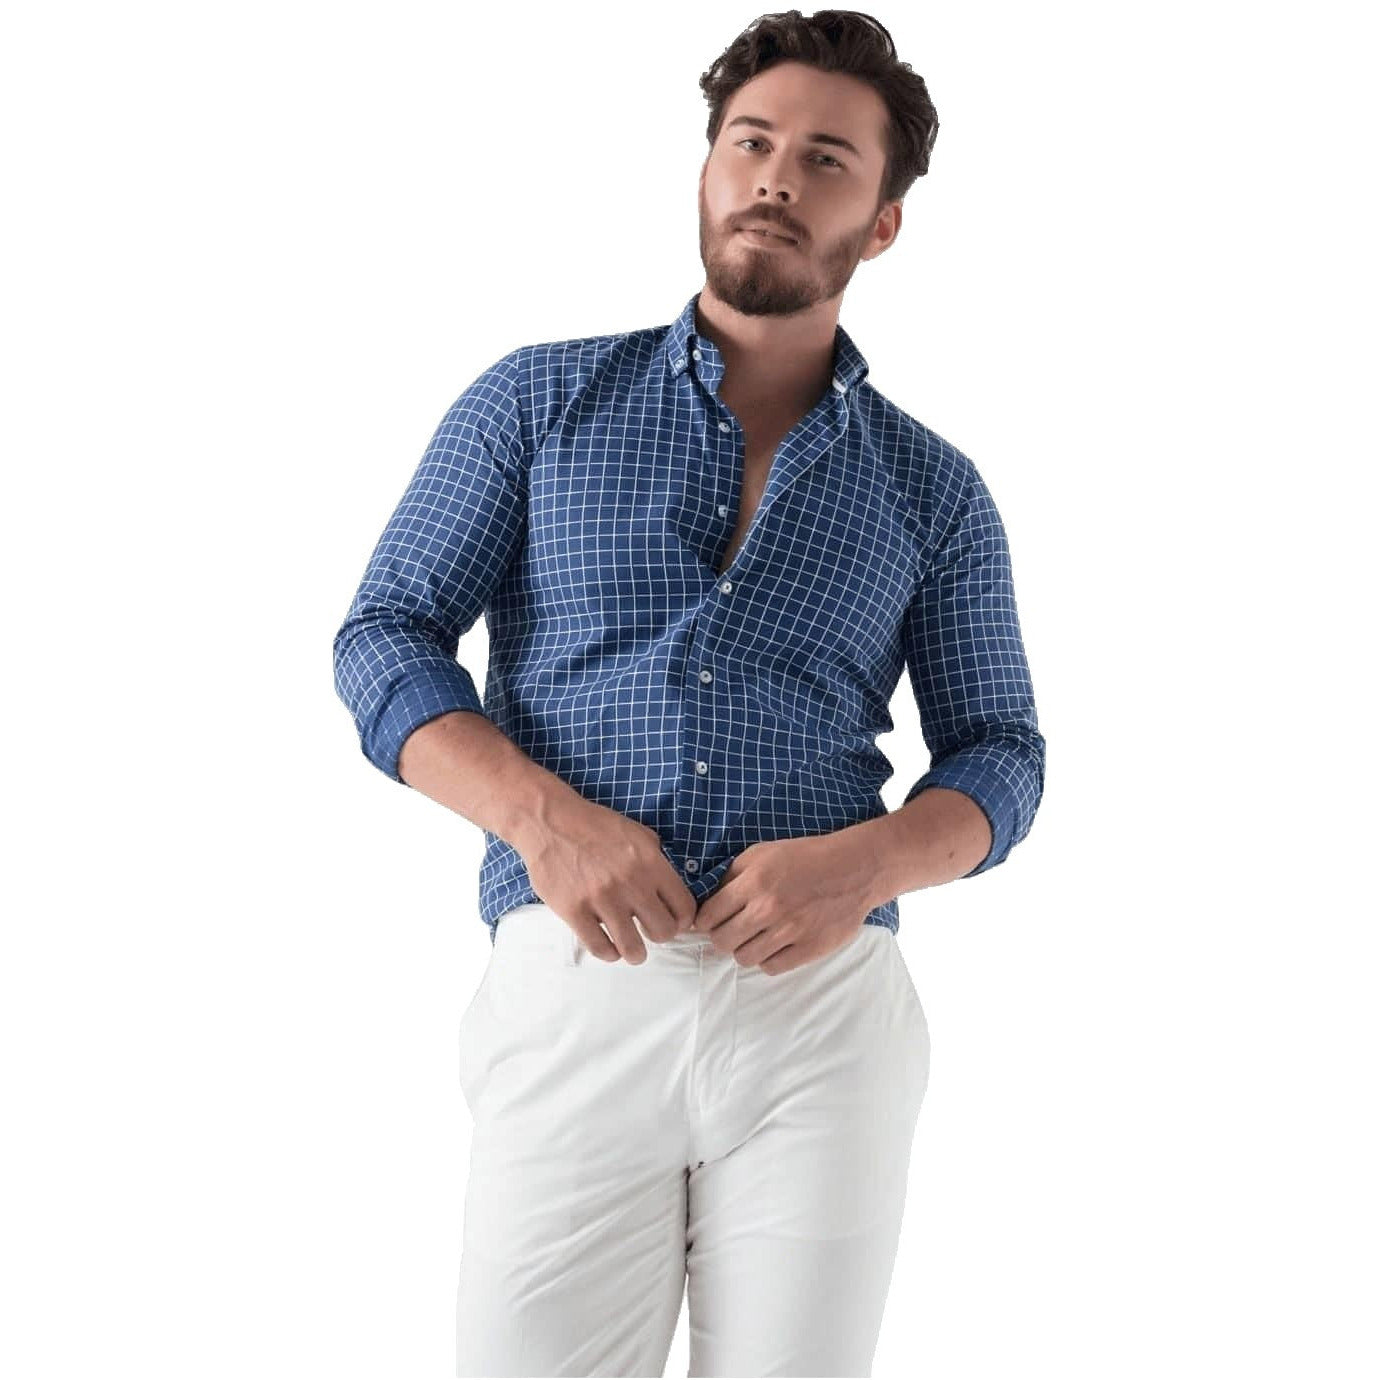 Inleg Hubert Hudson evolutie Web Blouse Overhemd Heren Blauw Geruit Slim Fit